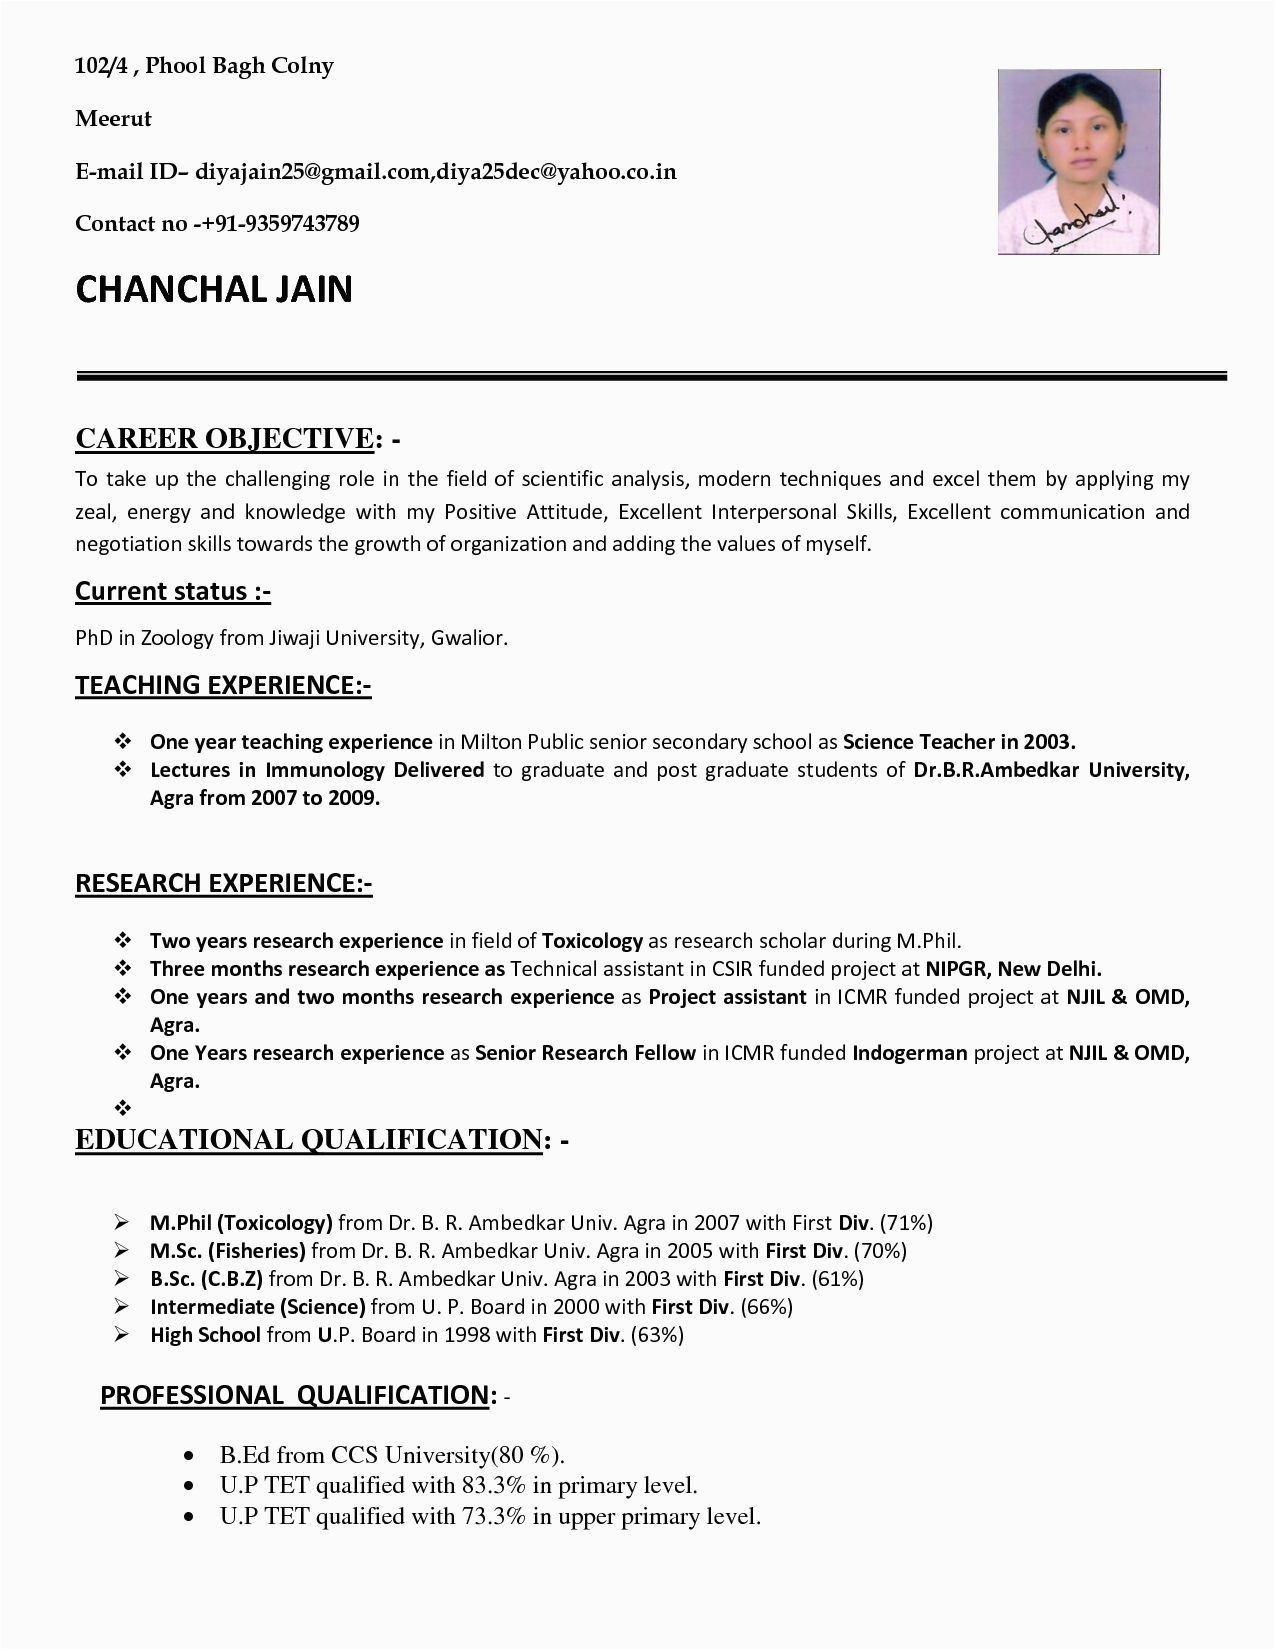 Sample Resume to Apply for Lecturer Post Resume format for School Teacher Job It Cover Letter